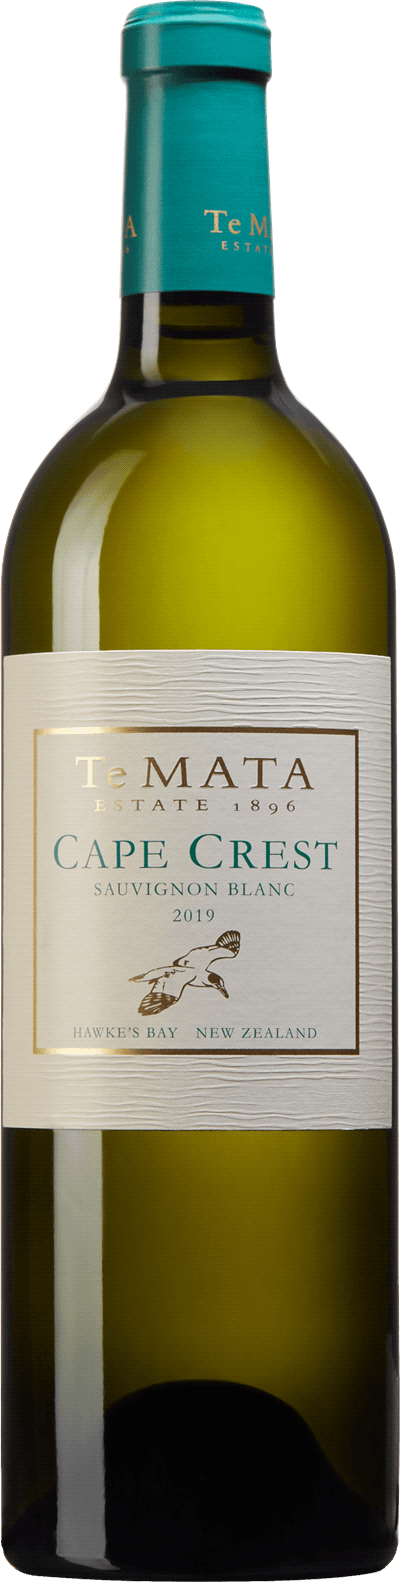 Produktbild för Te Mata Cape Crest